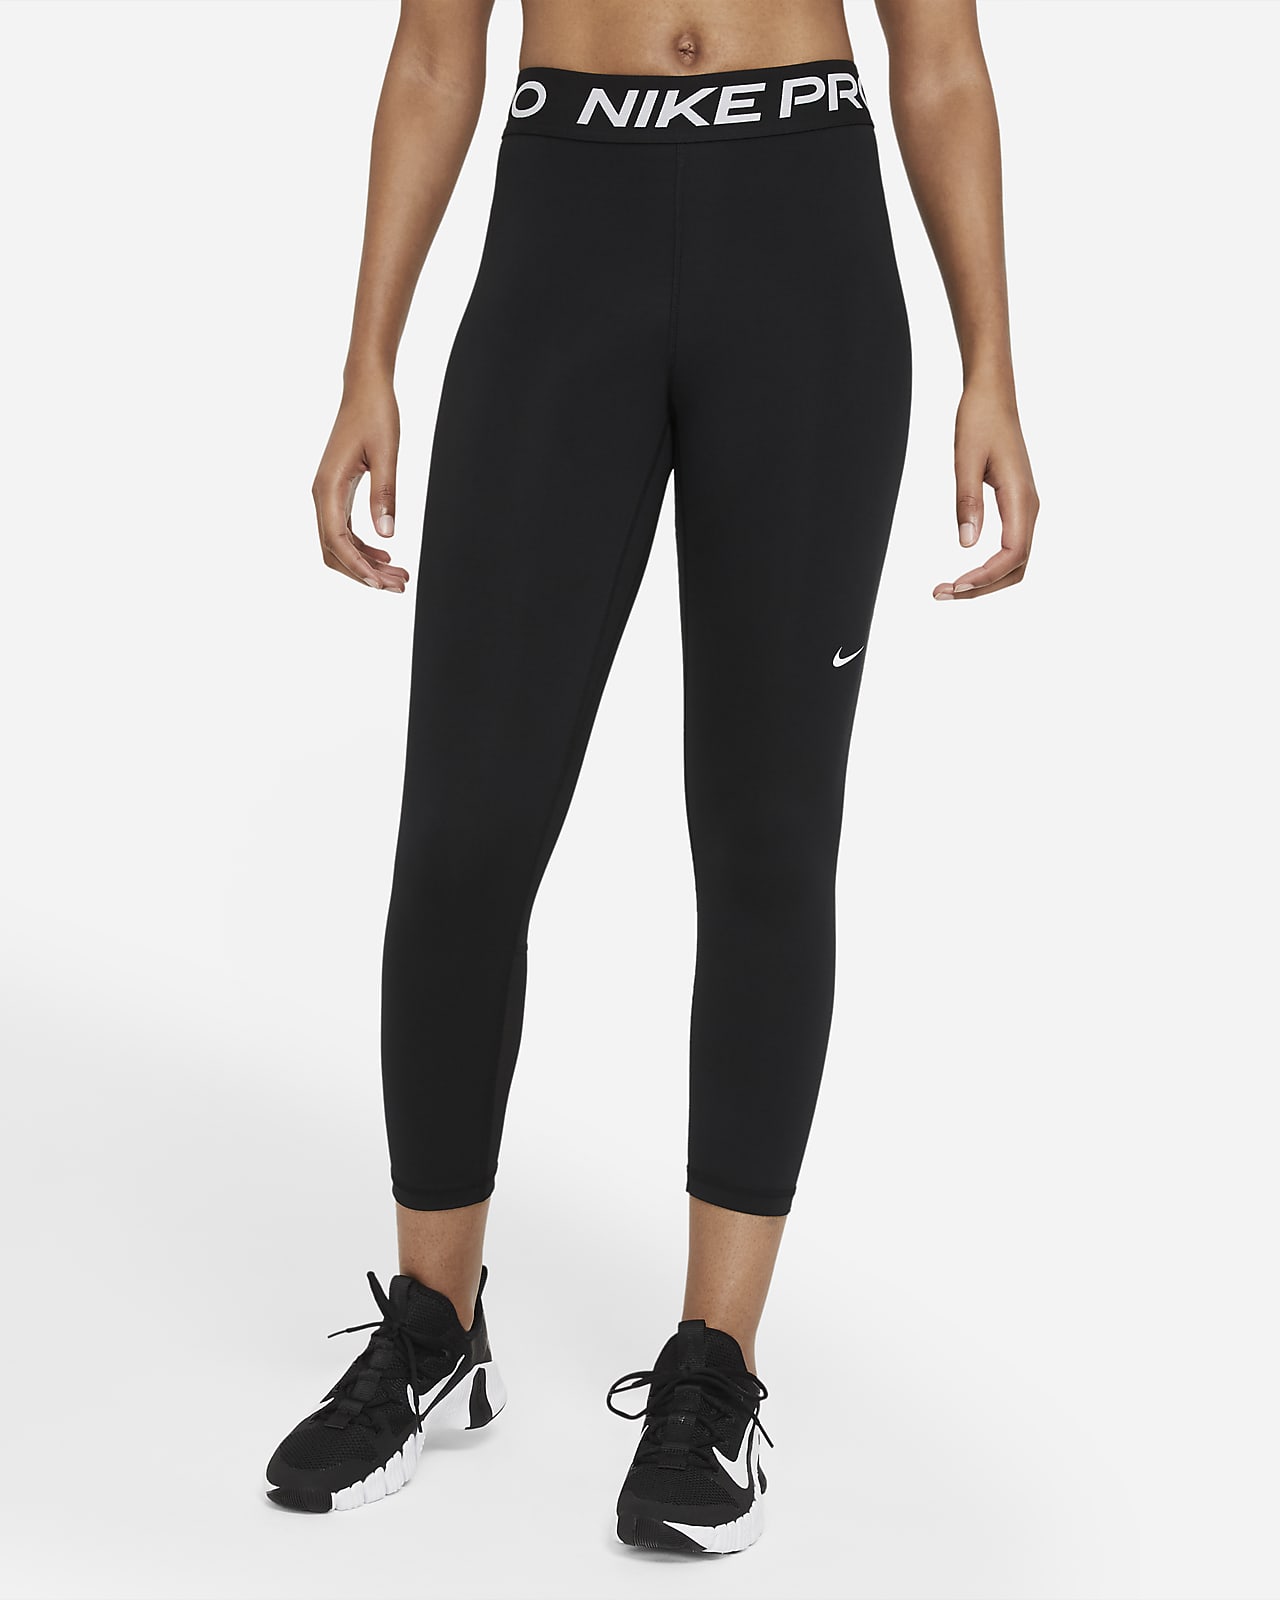 Leggings a lunghezza ridotta e inserti in mesh a vita media Nike Pro 365 – Donna